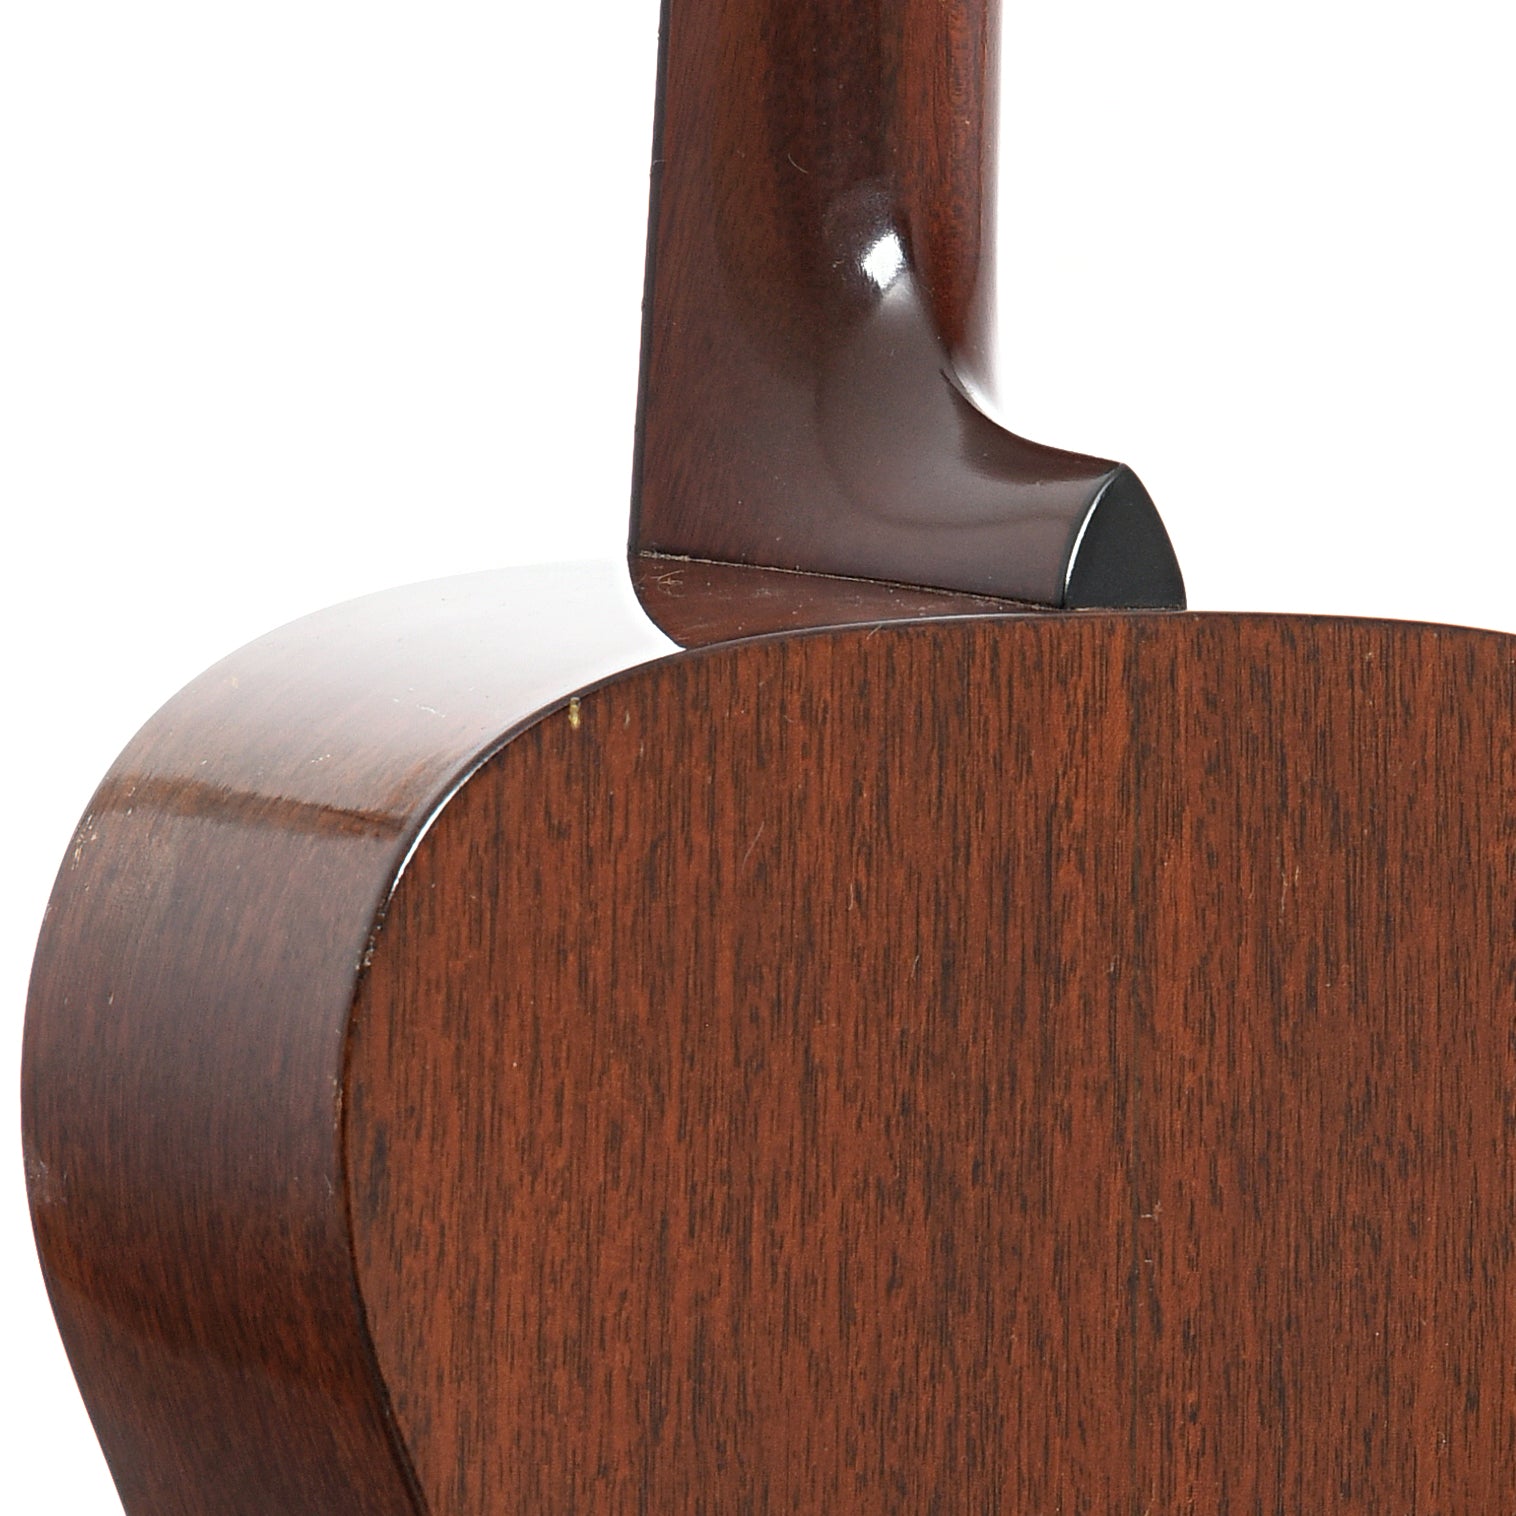 Heel of Martin 0-17 Acoustic Guitar (1937)